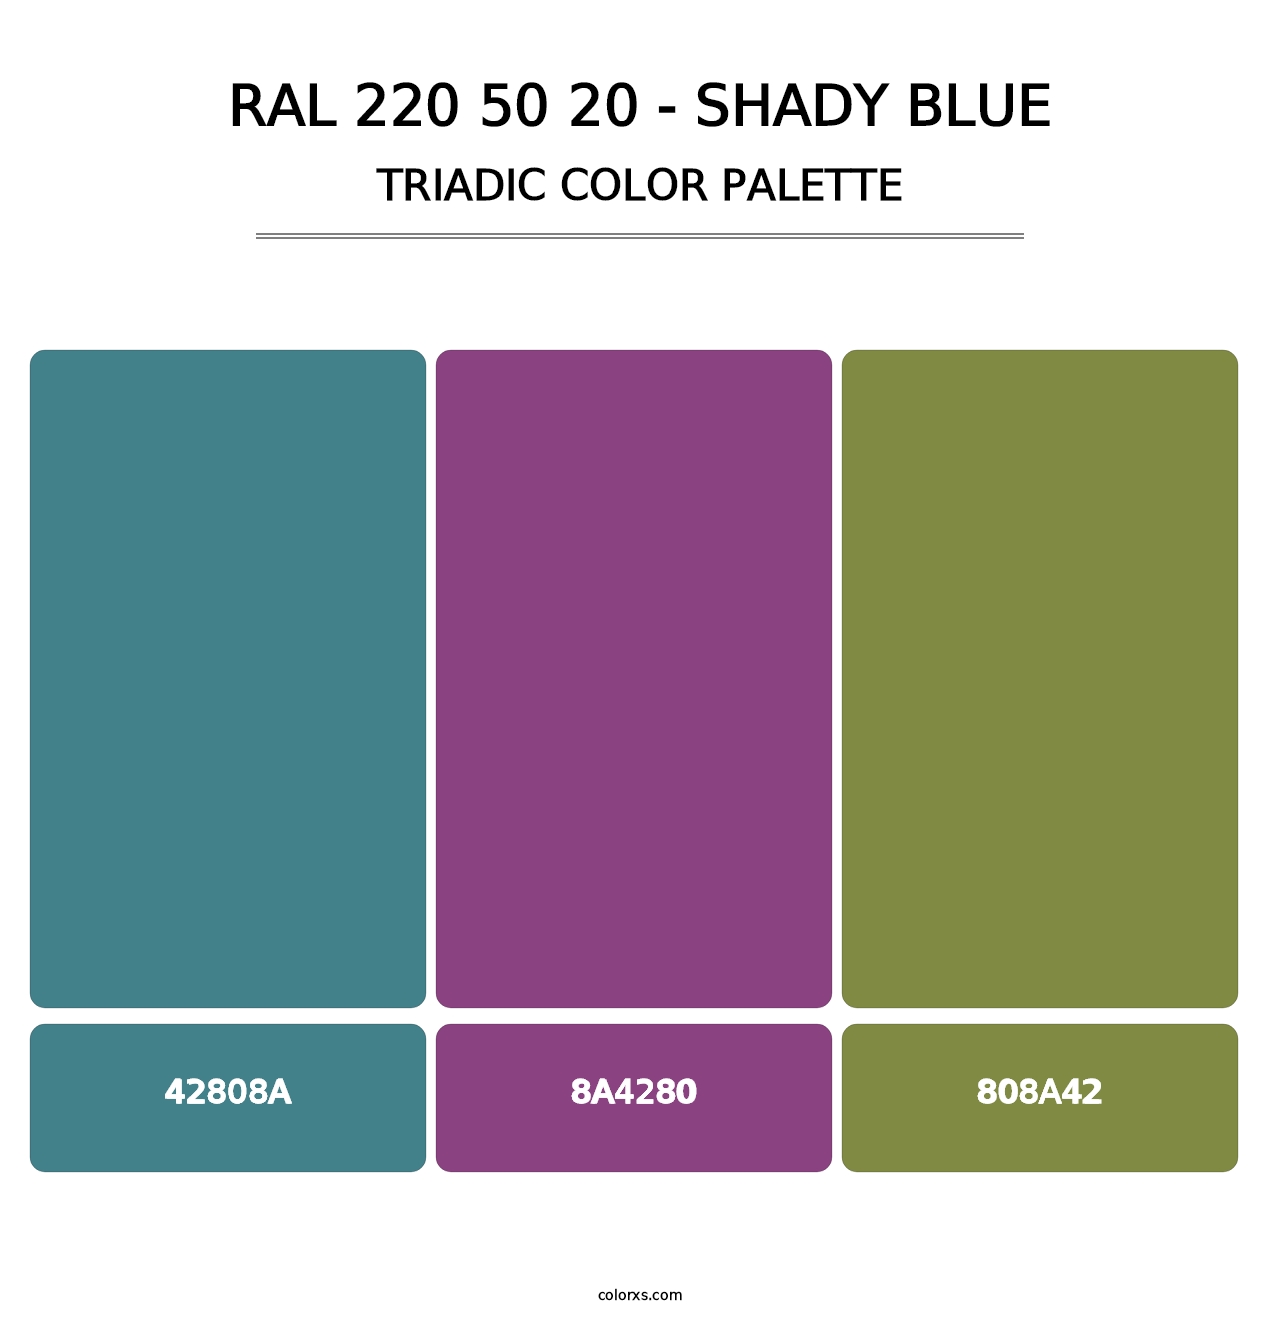 RAL 220 50 20 - Shady Blue - Triadic Color Palette